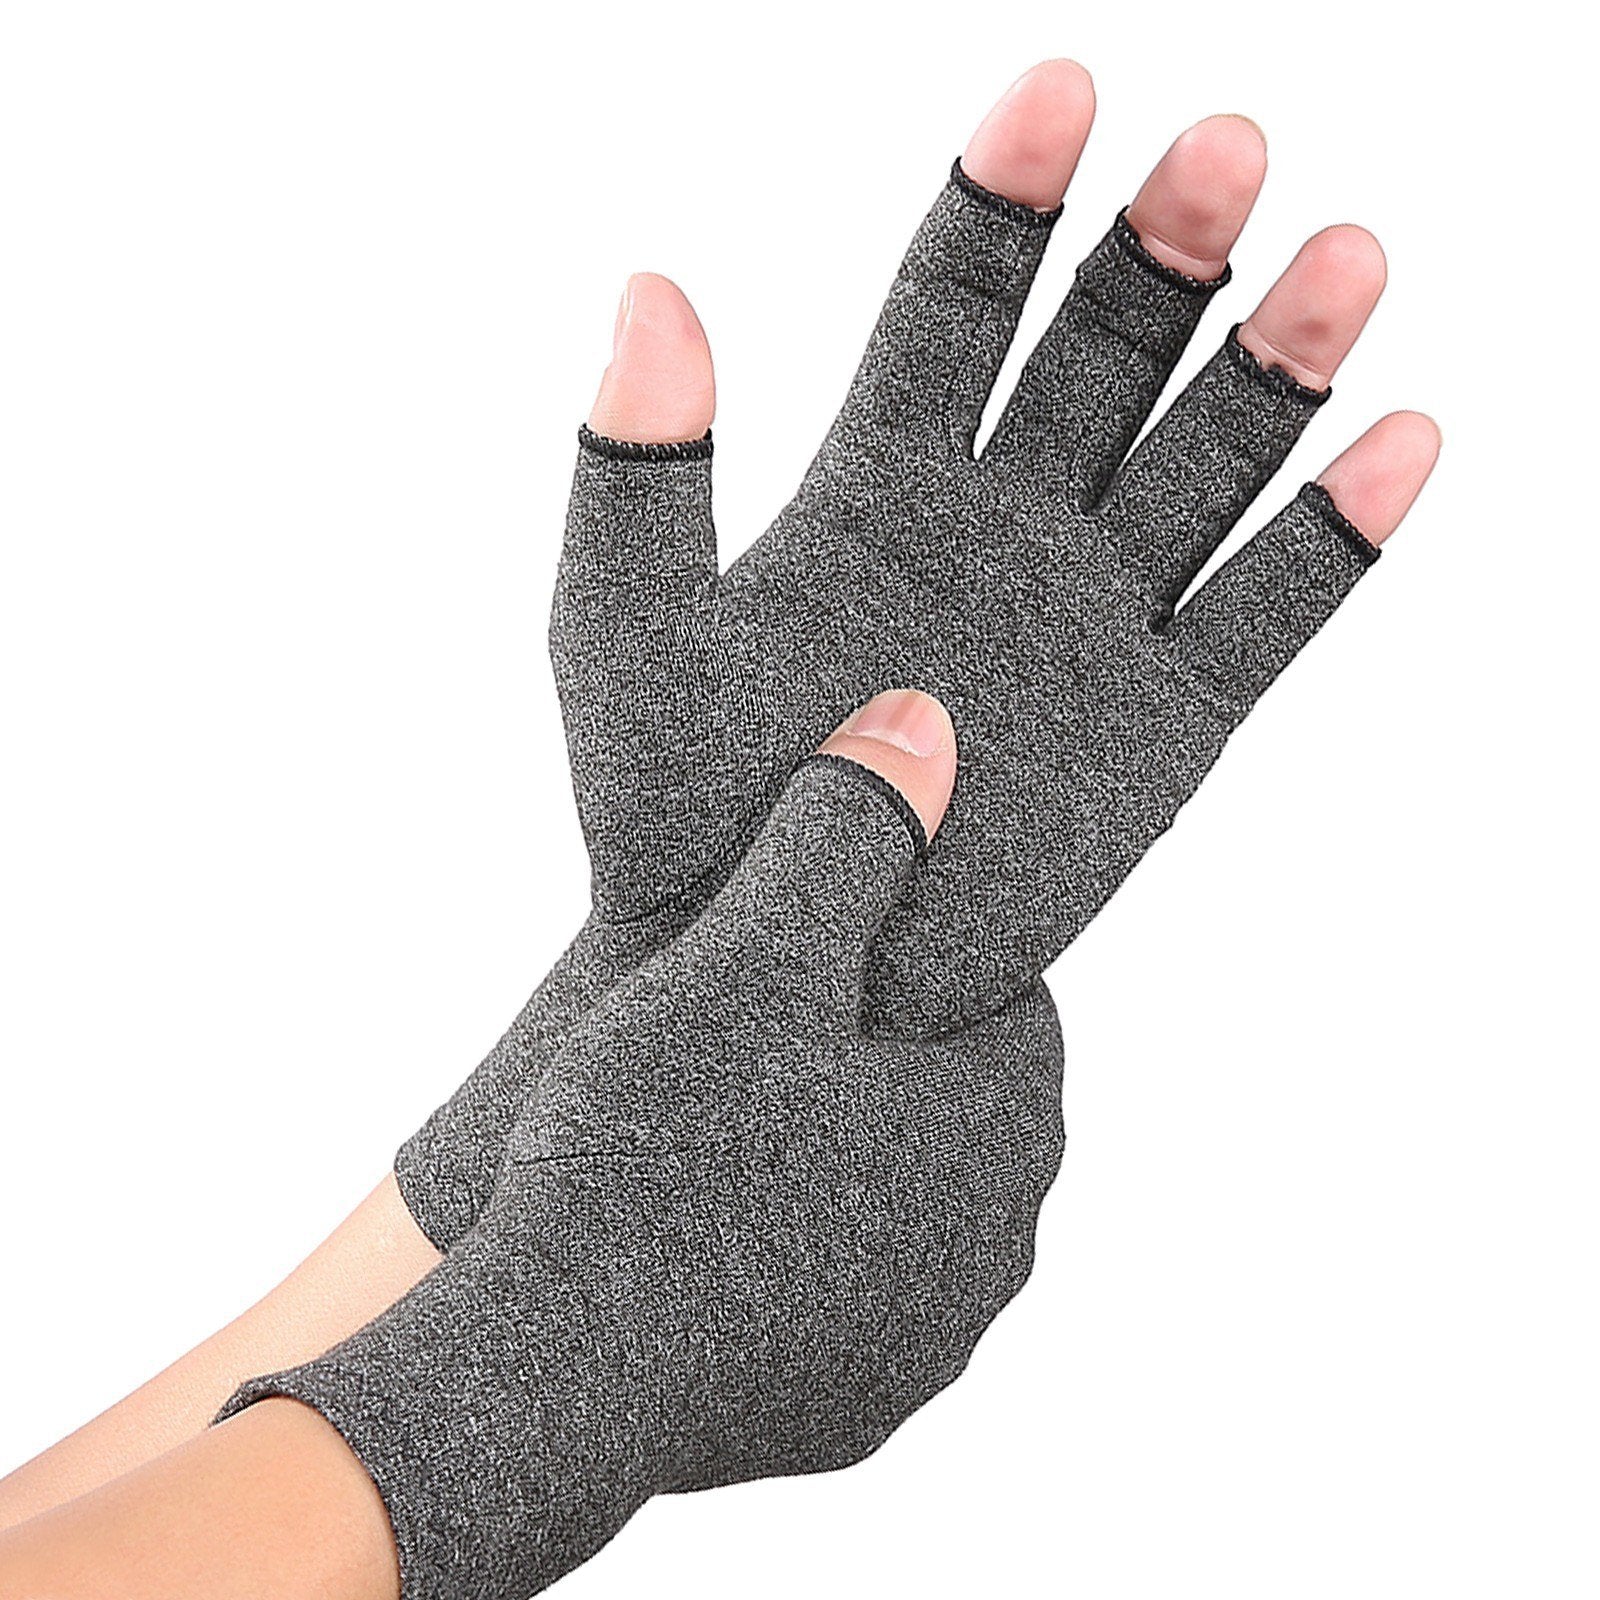 Arthritis Compression Gloves Health Care Nursing